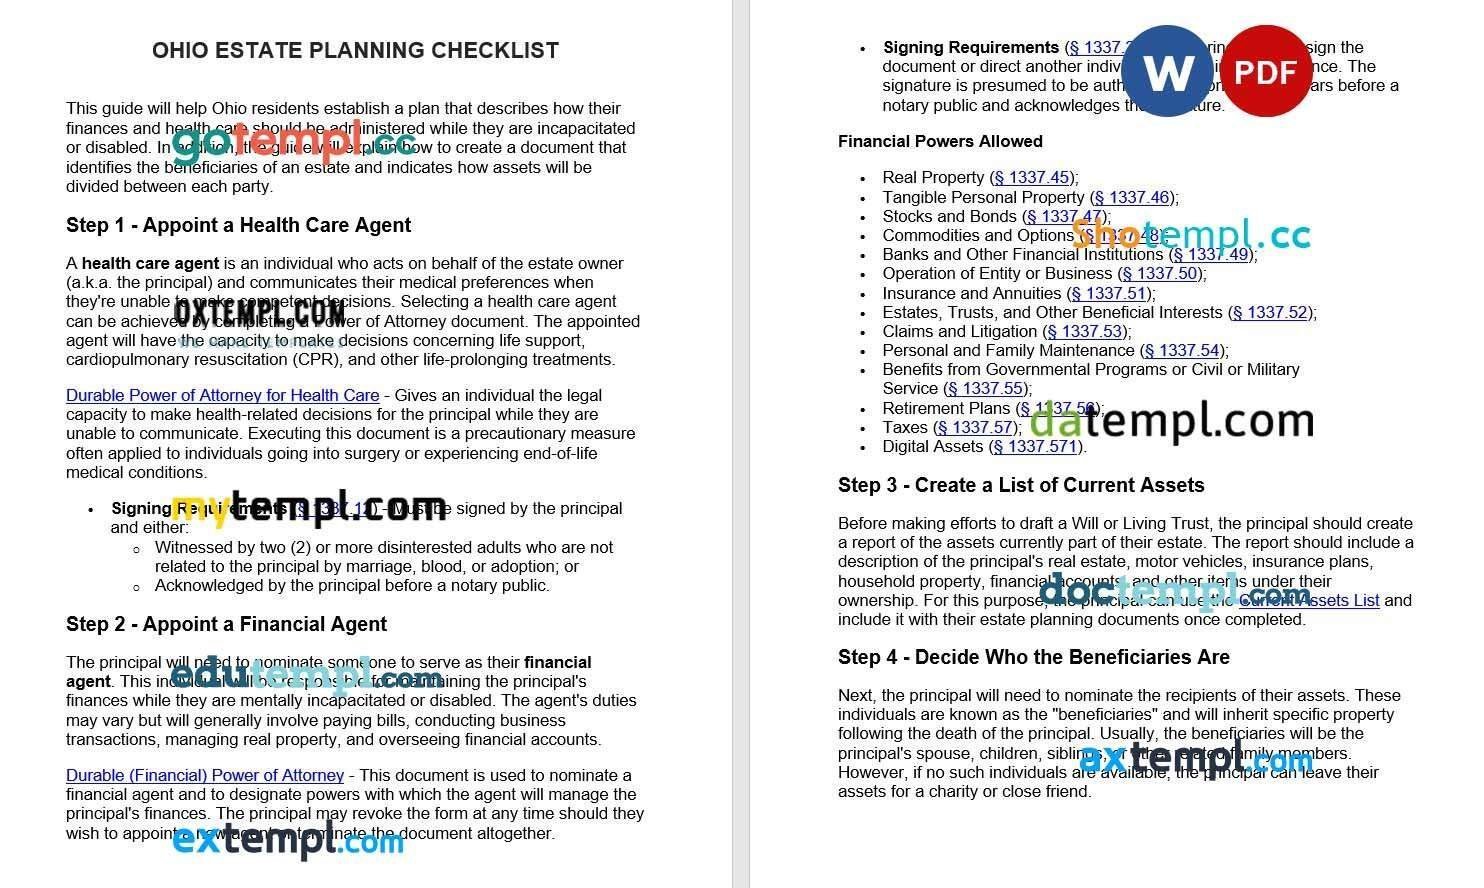 Ohio Estate Planning Checklist example, fully editable